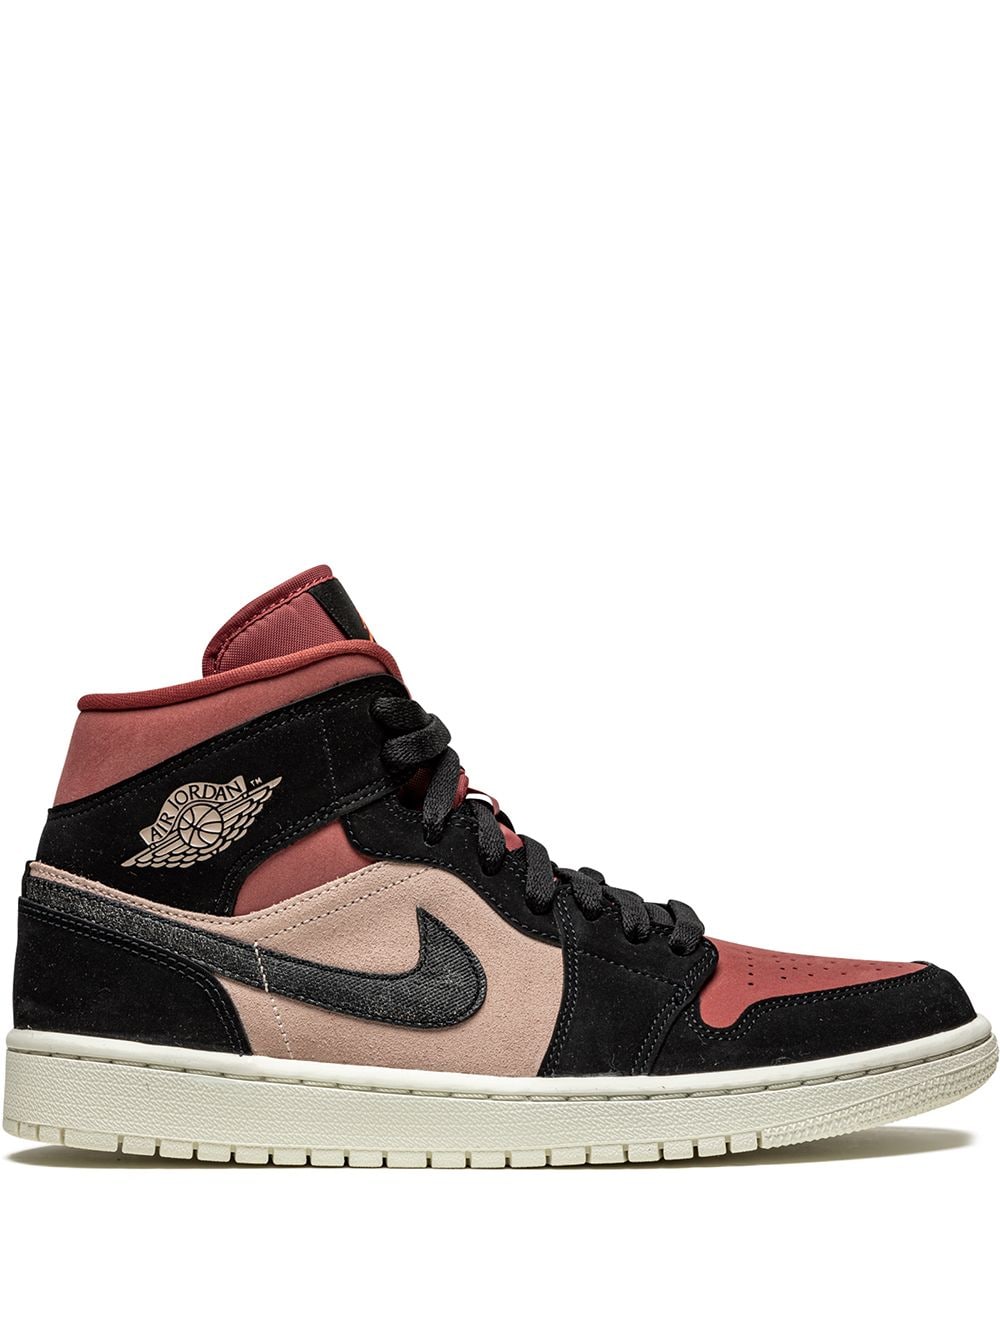 Jordan Air Jordan 1 Mid "Canyon Rust" sneakers - Black